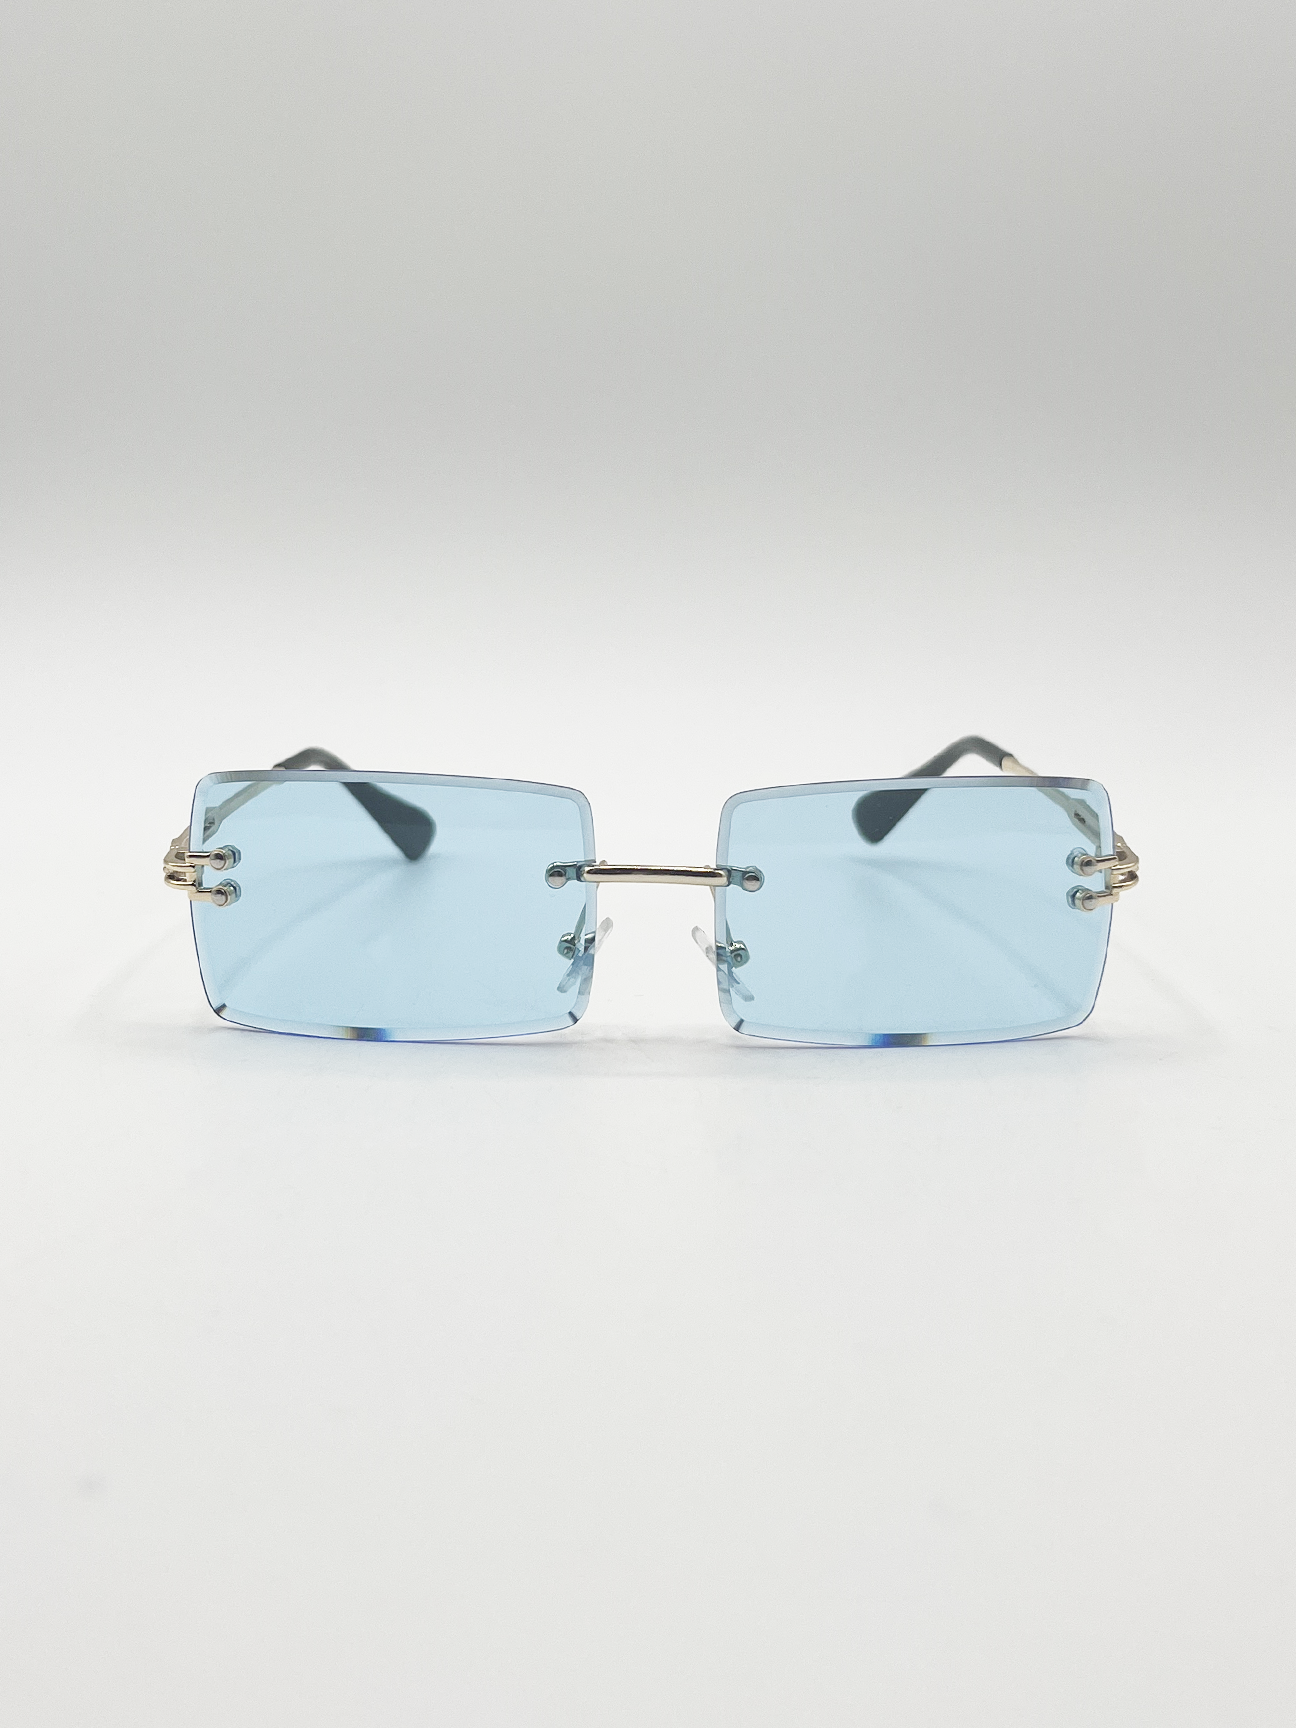 Frameless Square Sunglasses in Pale Blue